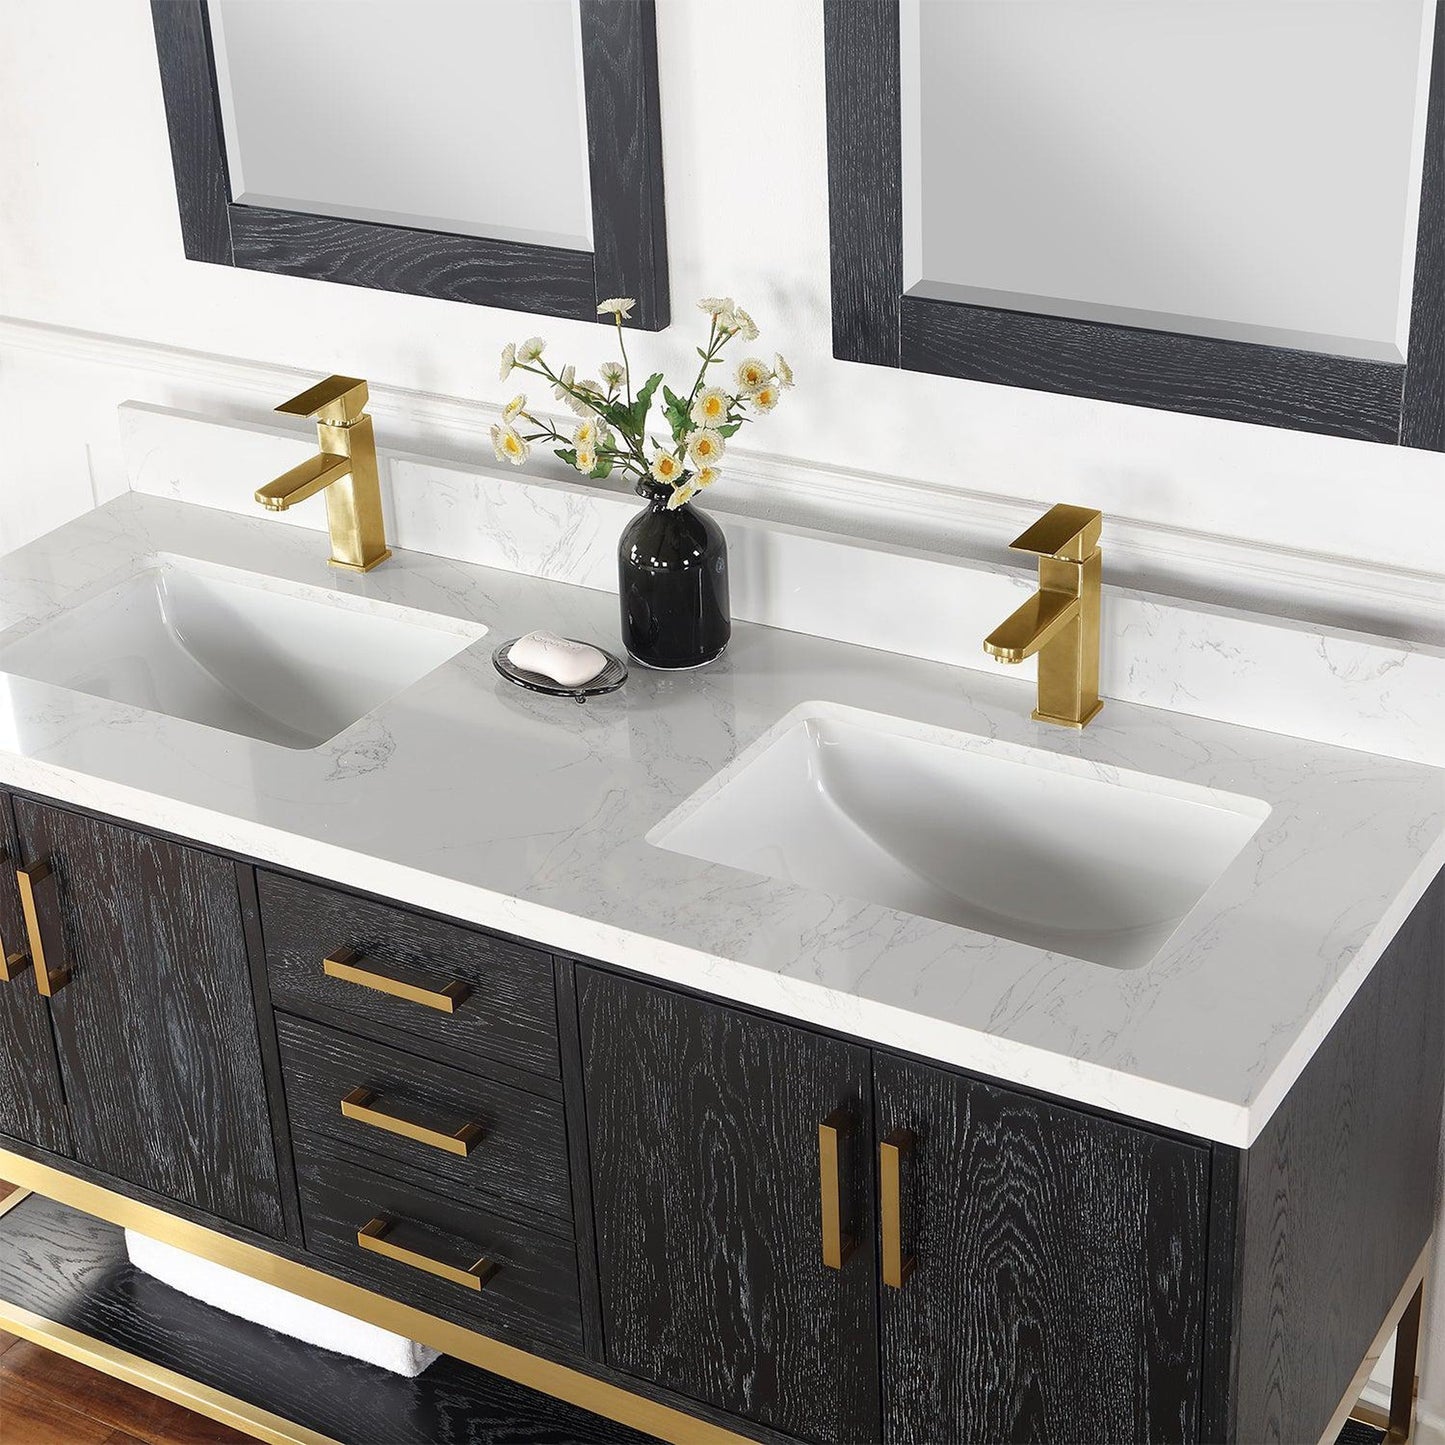 Altair Wildy 60" Black Oak Freestanding Double Bathroom Vanity Set With Mirror, Stylish Composite Grain White Stone Top, Two Rectangular Undermount Ceramic Sinks, Overflow, and Backsplash